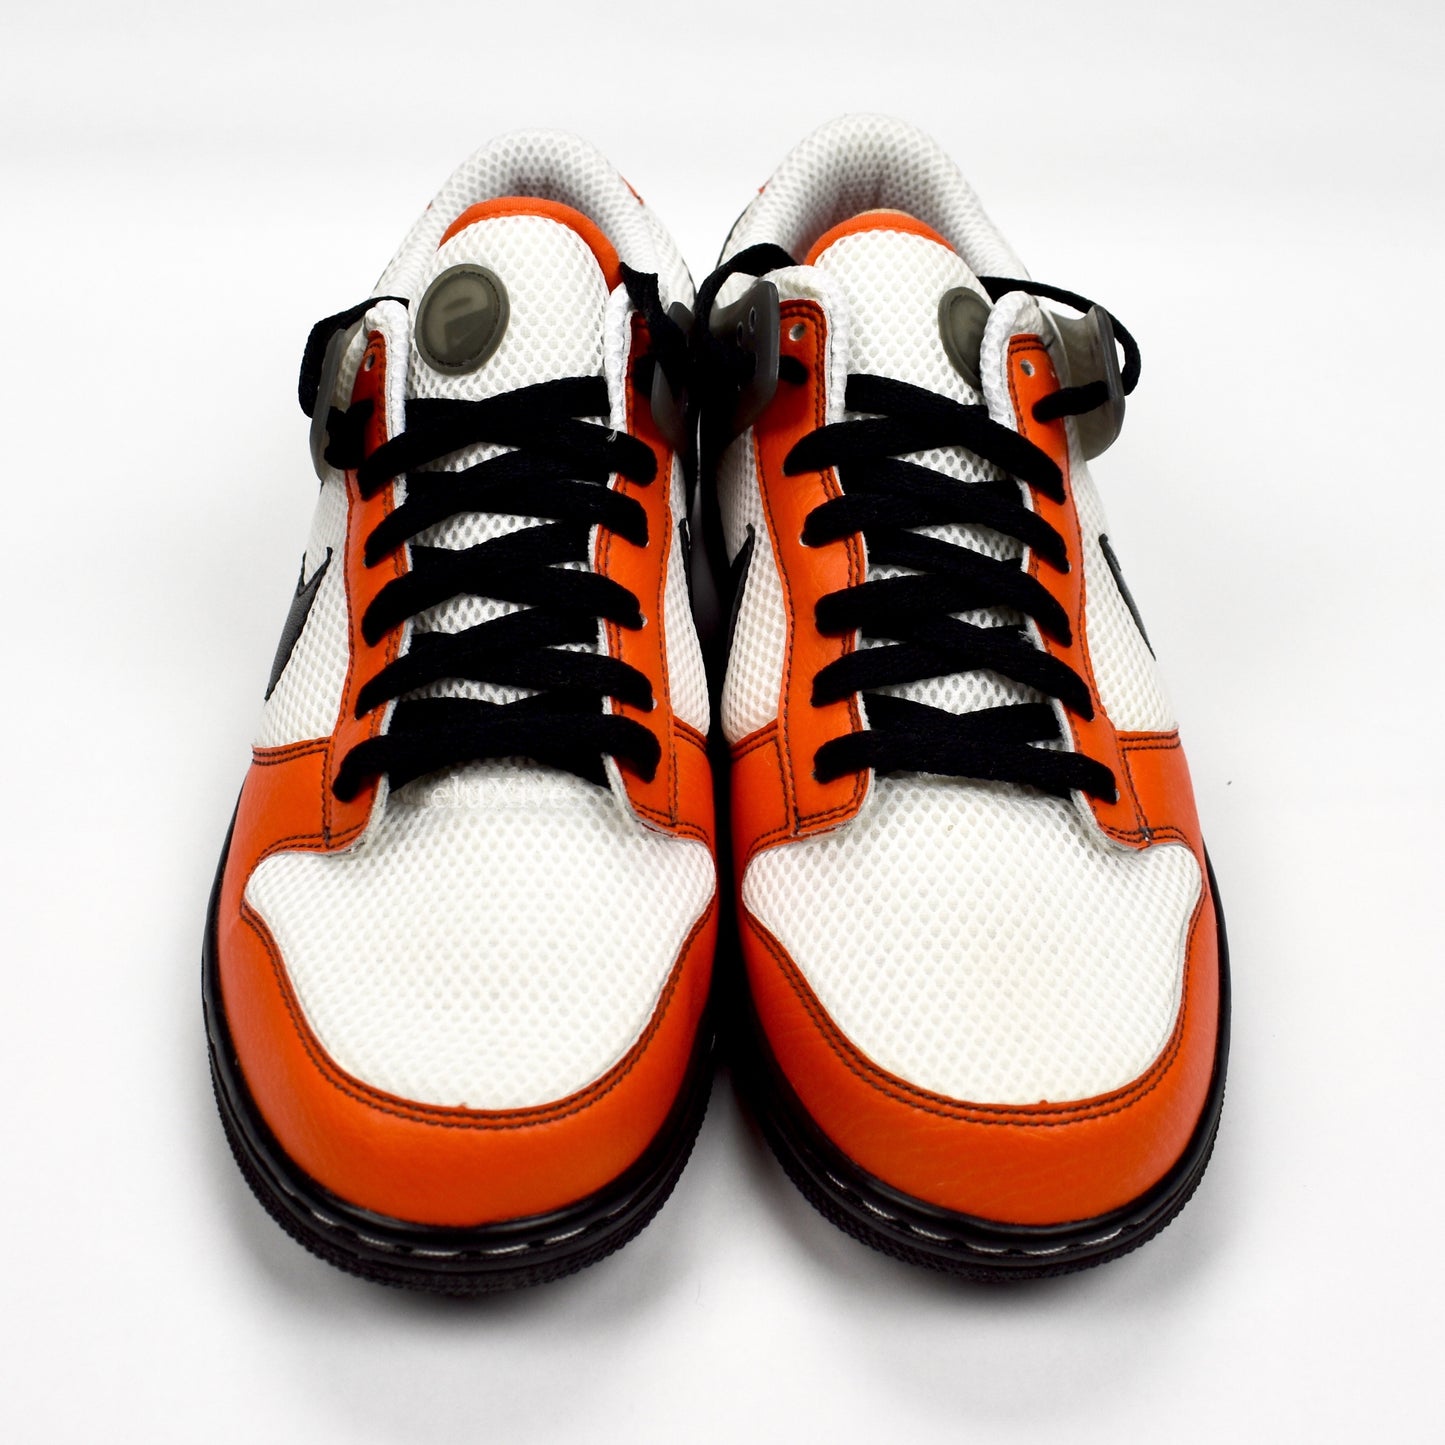 Nike - Air Zoom Dunkesto (White/Black/Orange)